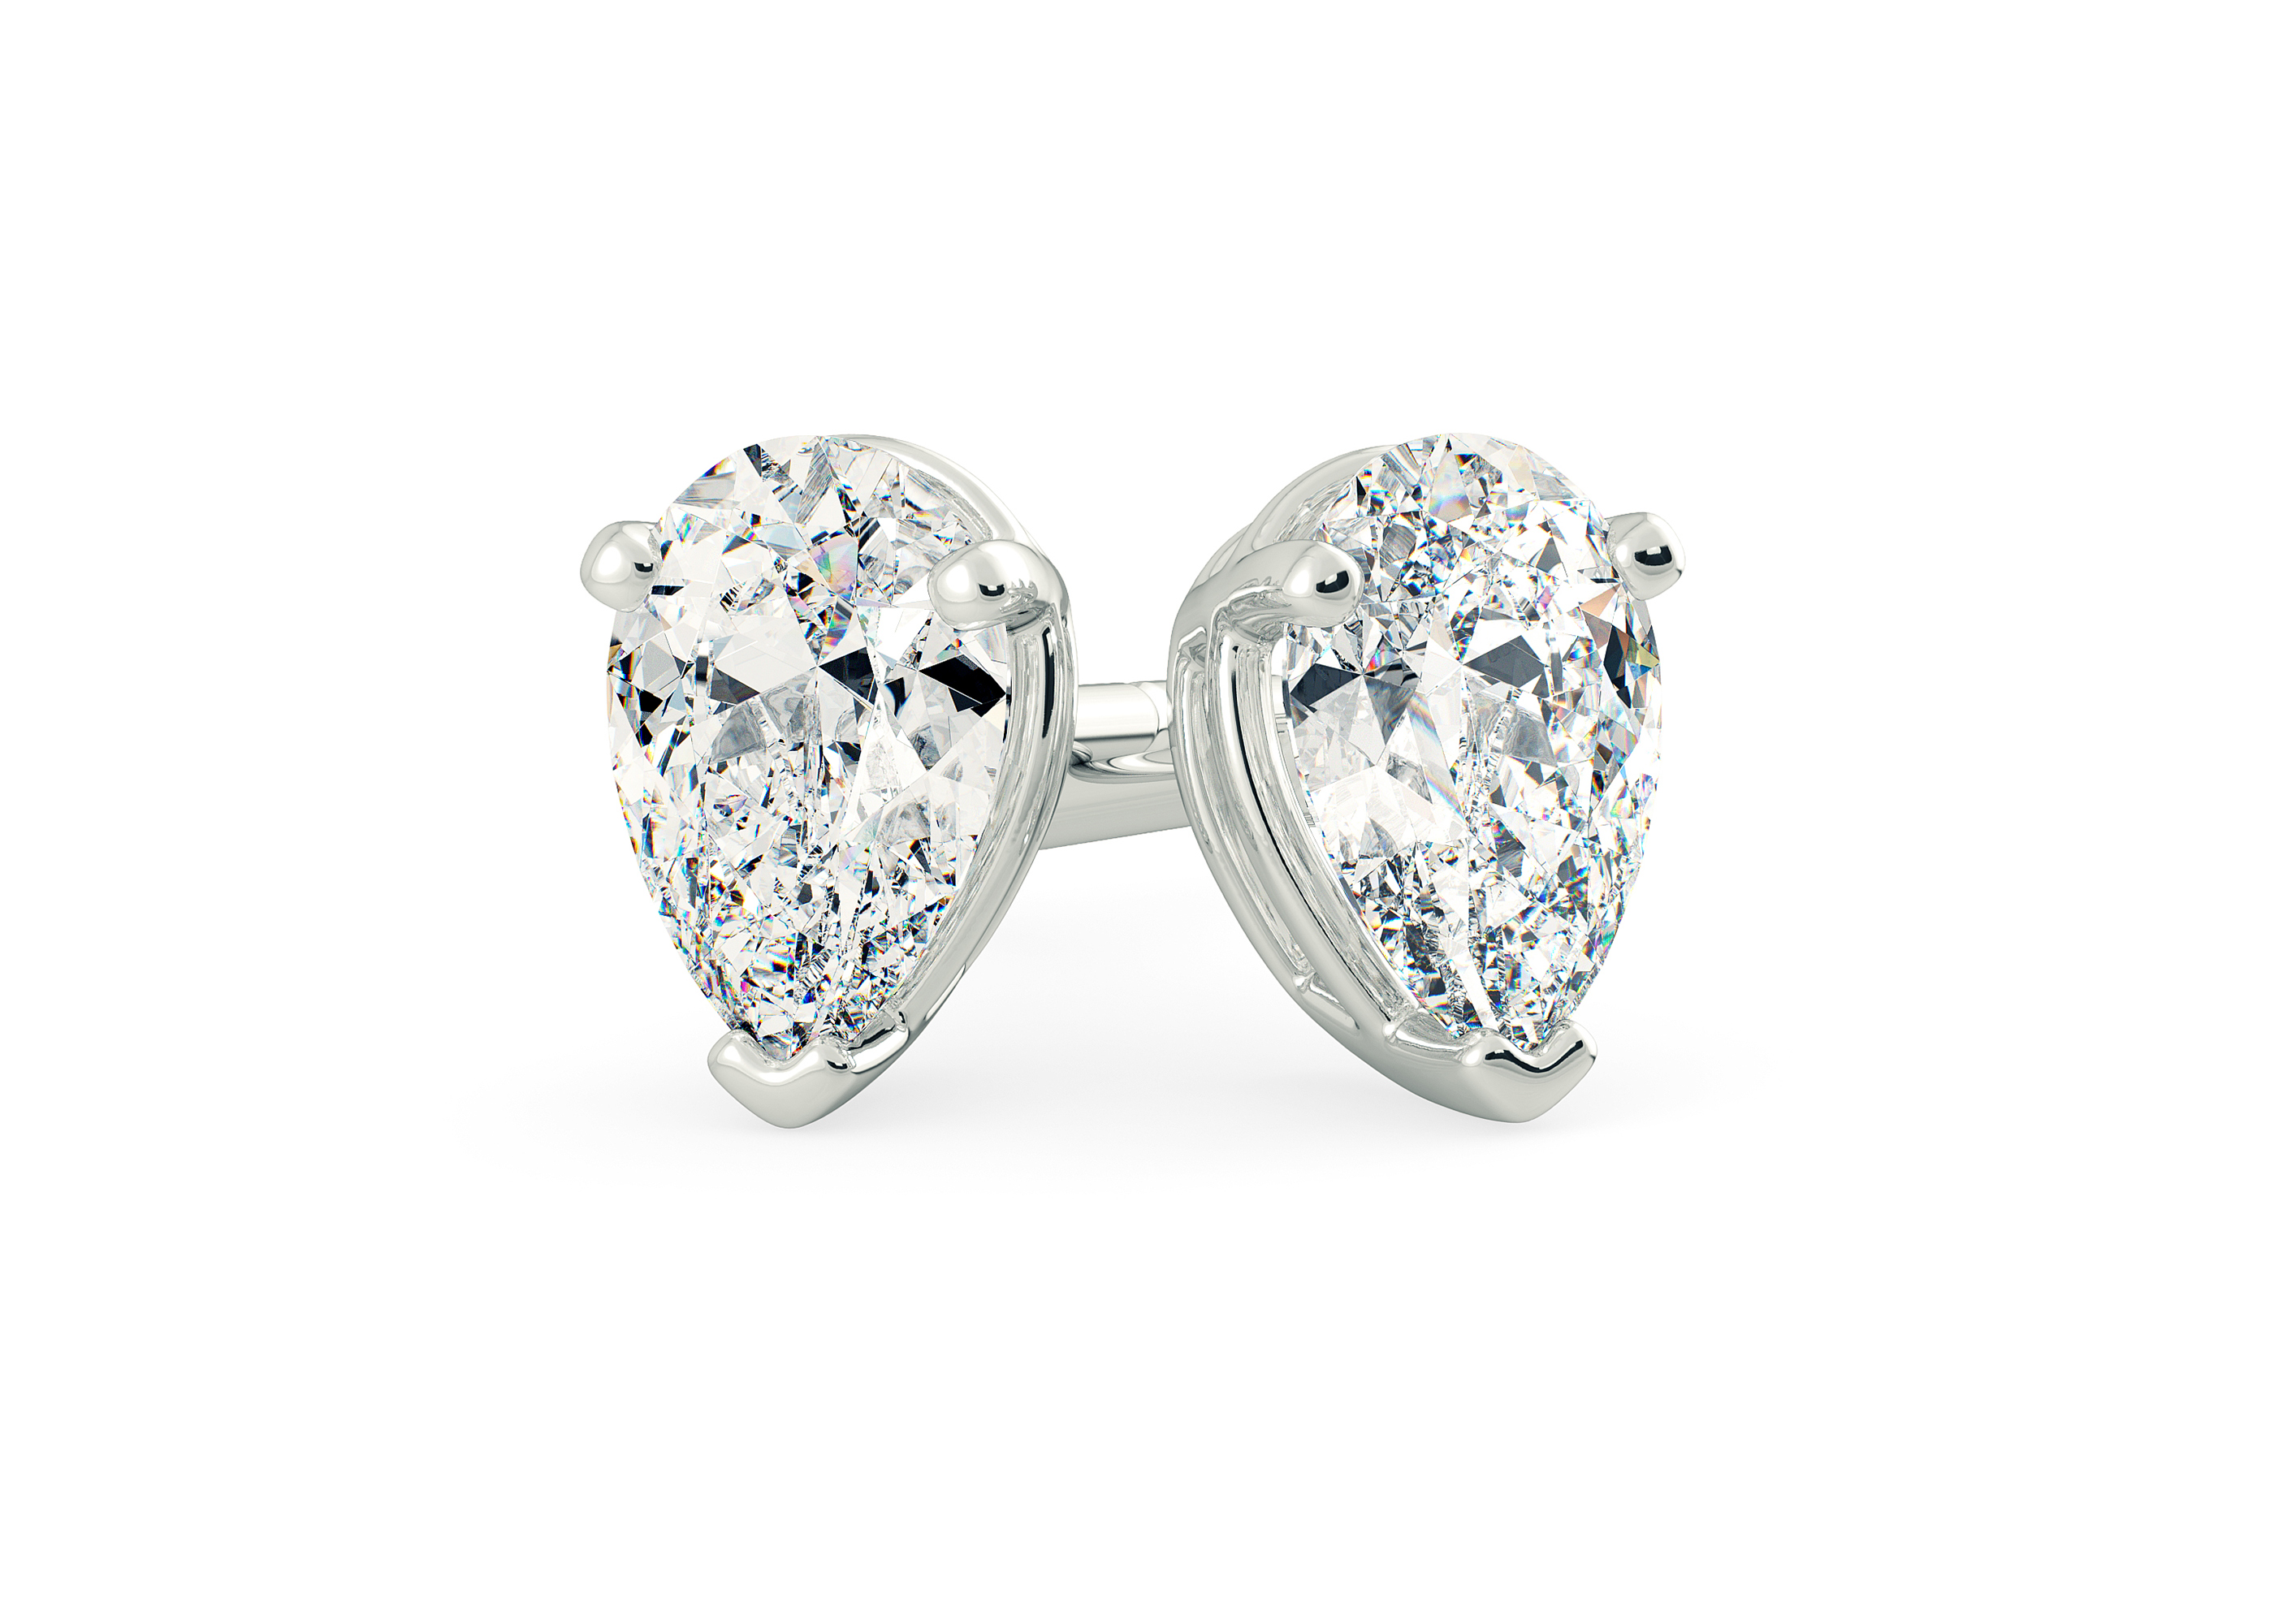 Two Carat Pear Diamond Stud Earrings in Platinum 950